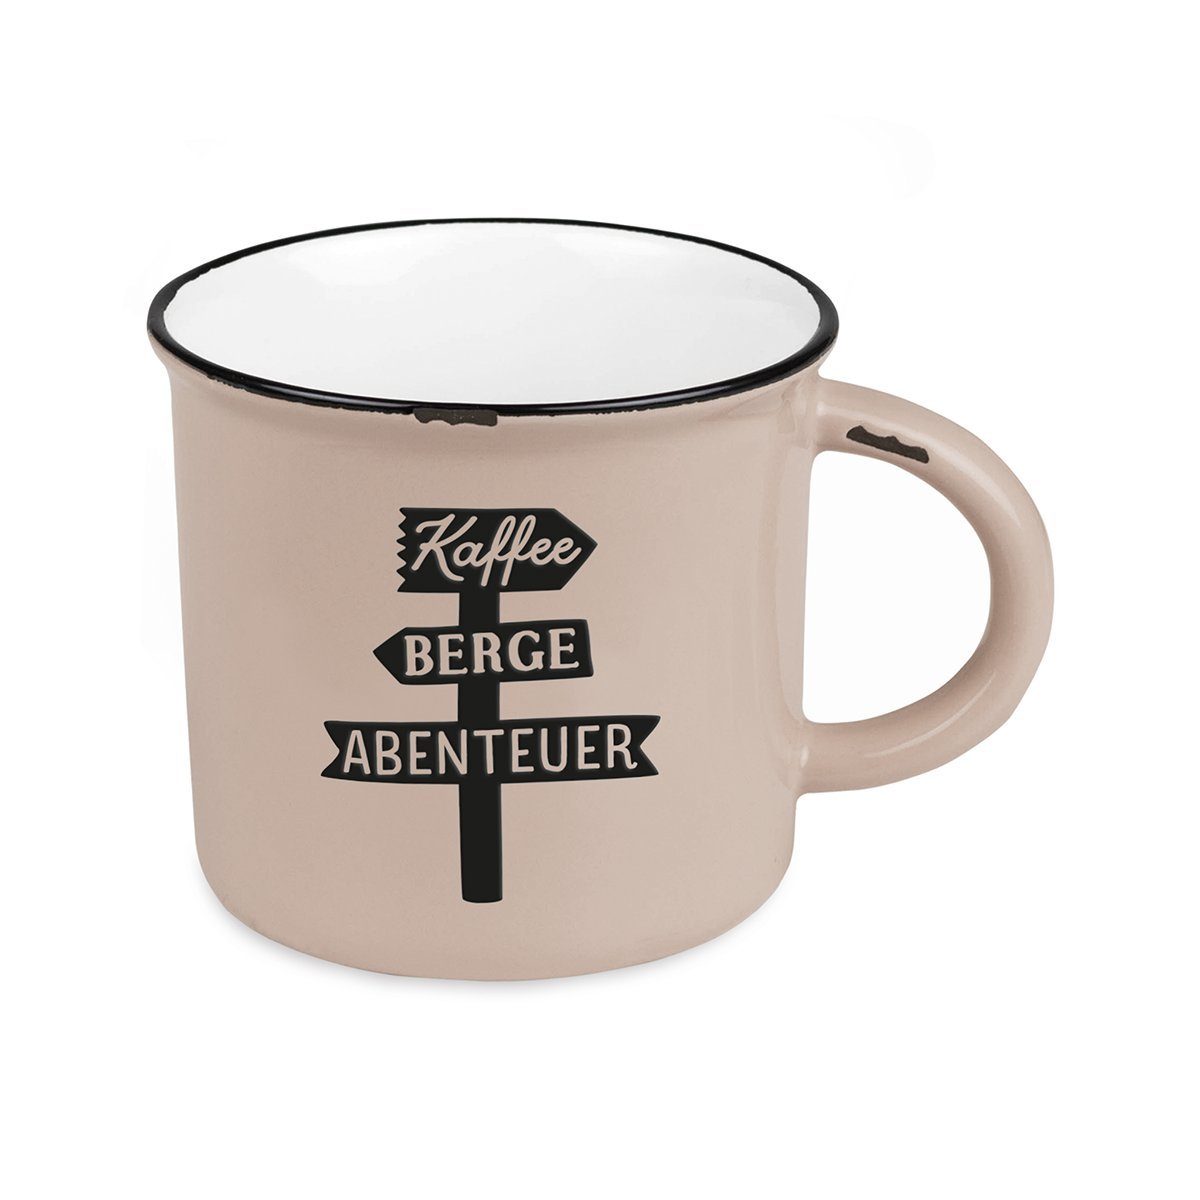 Grafik Werkstatt Tasse Vintage-Tasse im Emaille-Look Bergglück Kaffee Berge Abenteuer, Keramik